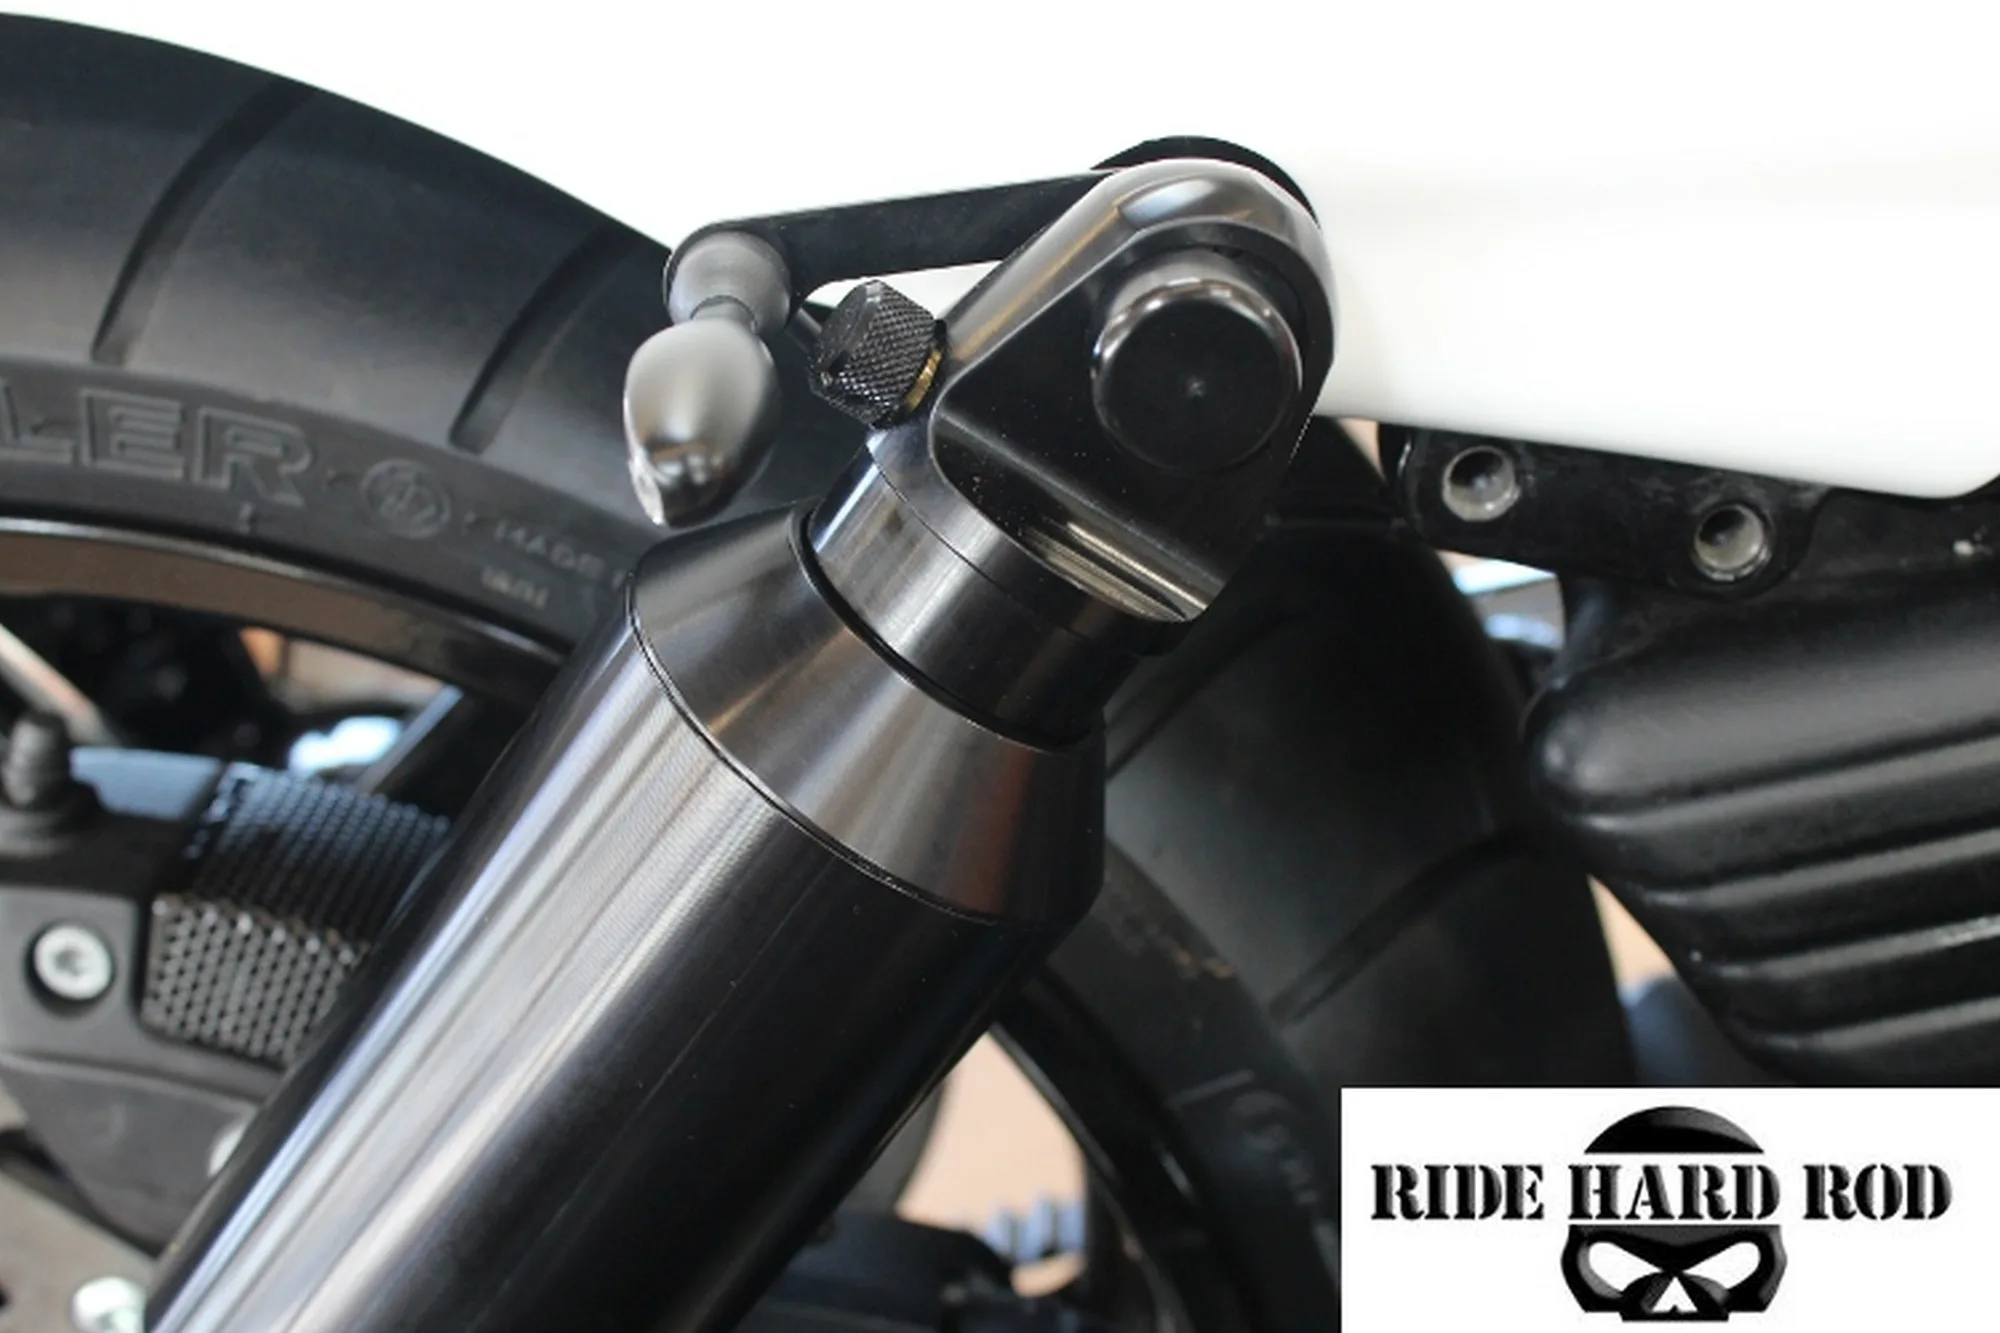 Federwegsbegrenzer Aluminium - Ride Hard Rod